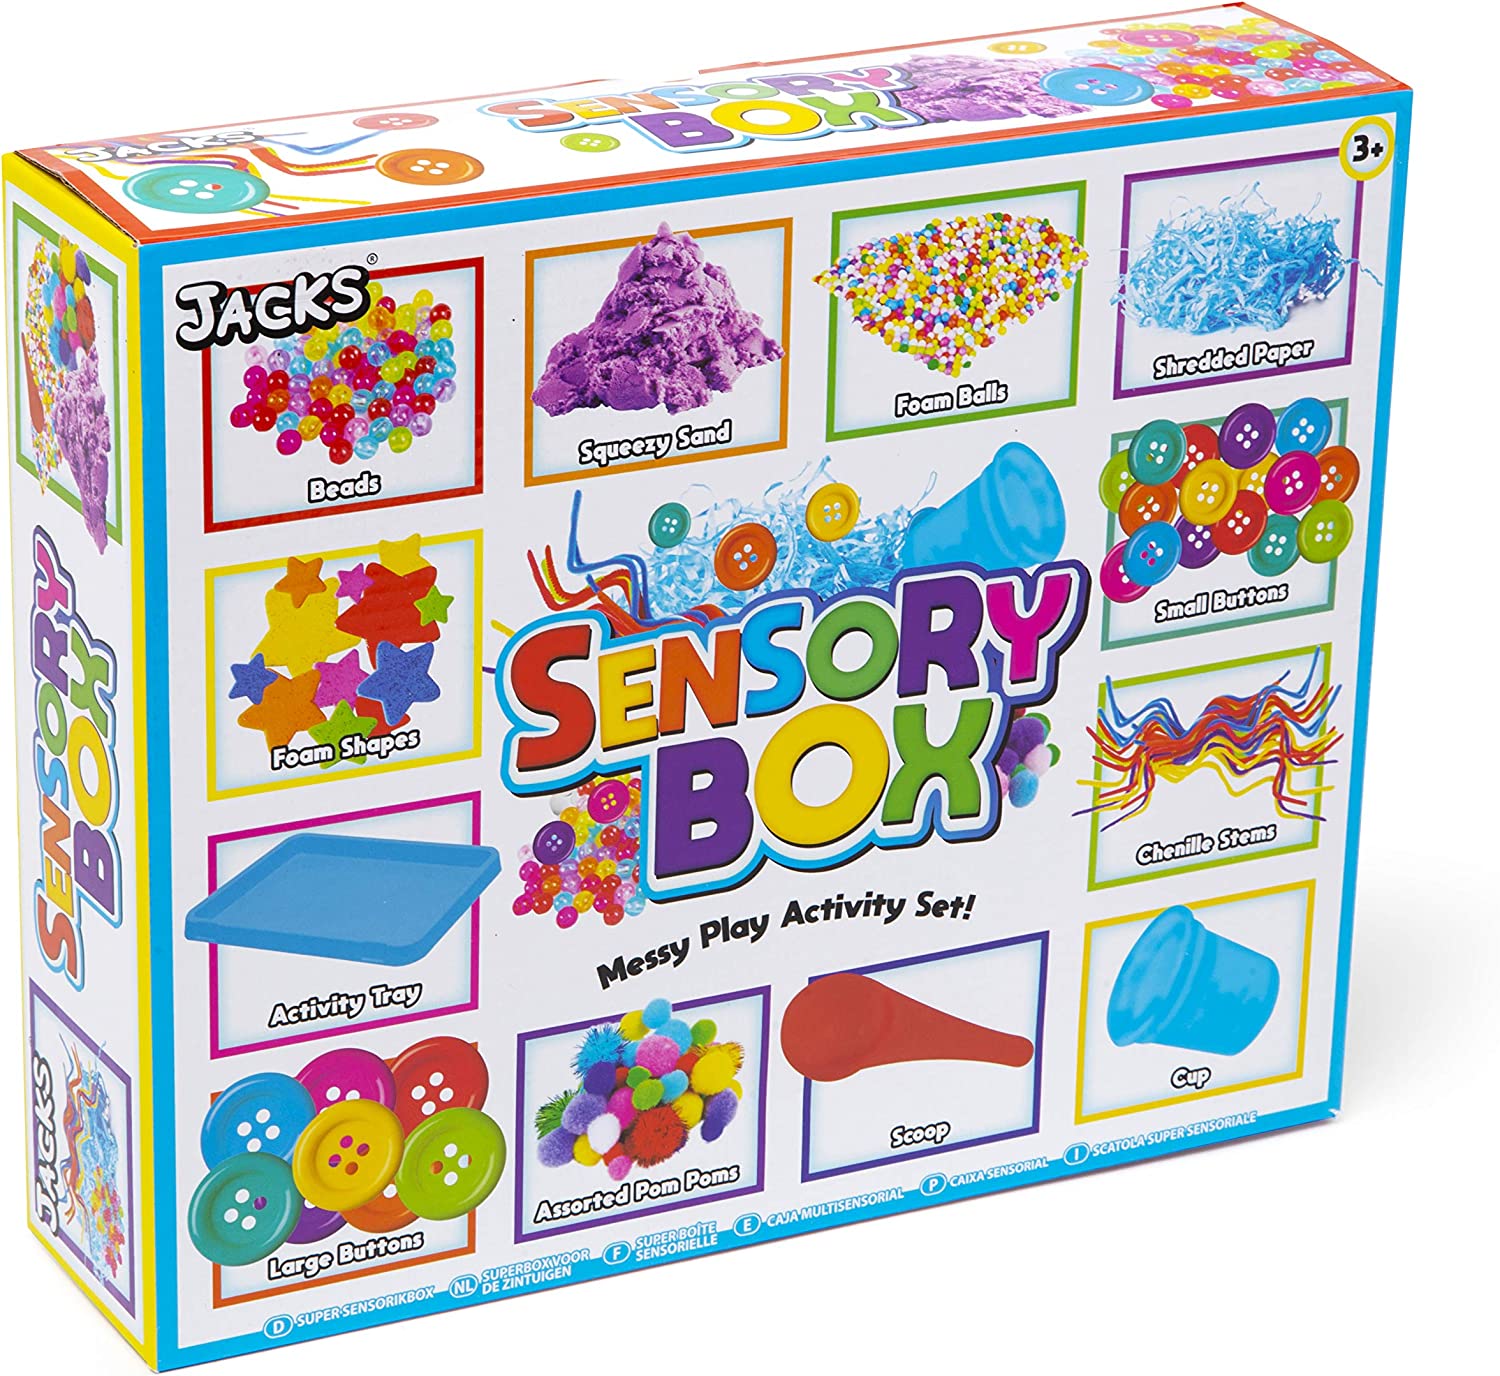 jacks sensory box activity set - sensory toys for babies